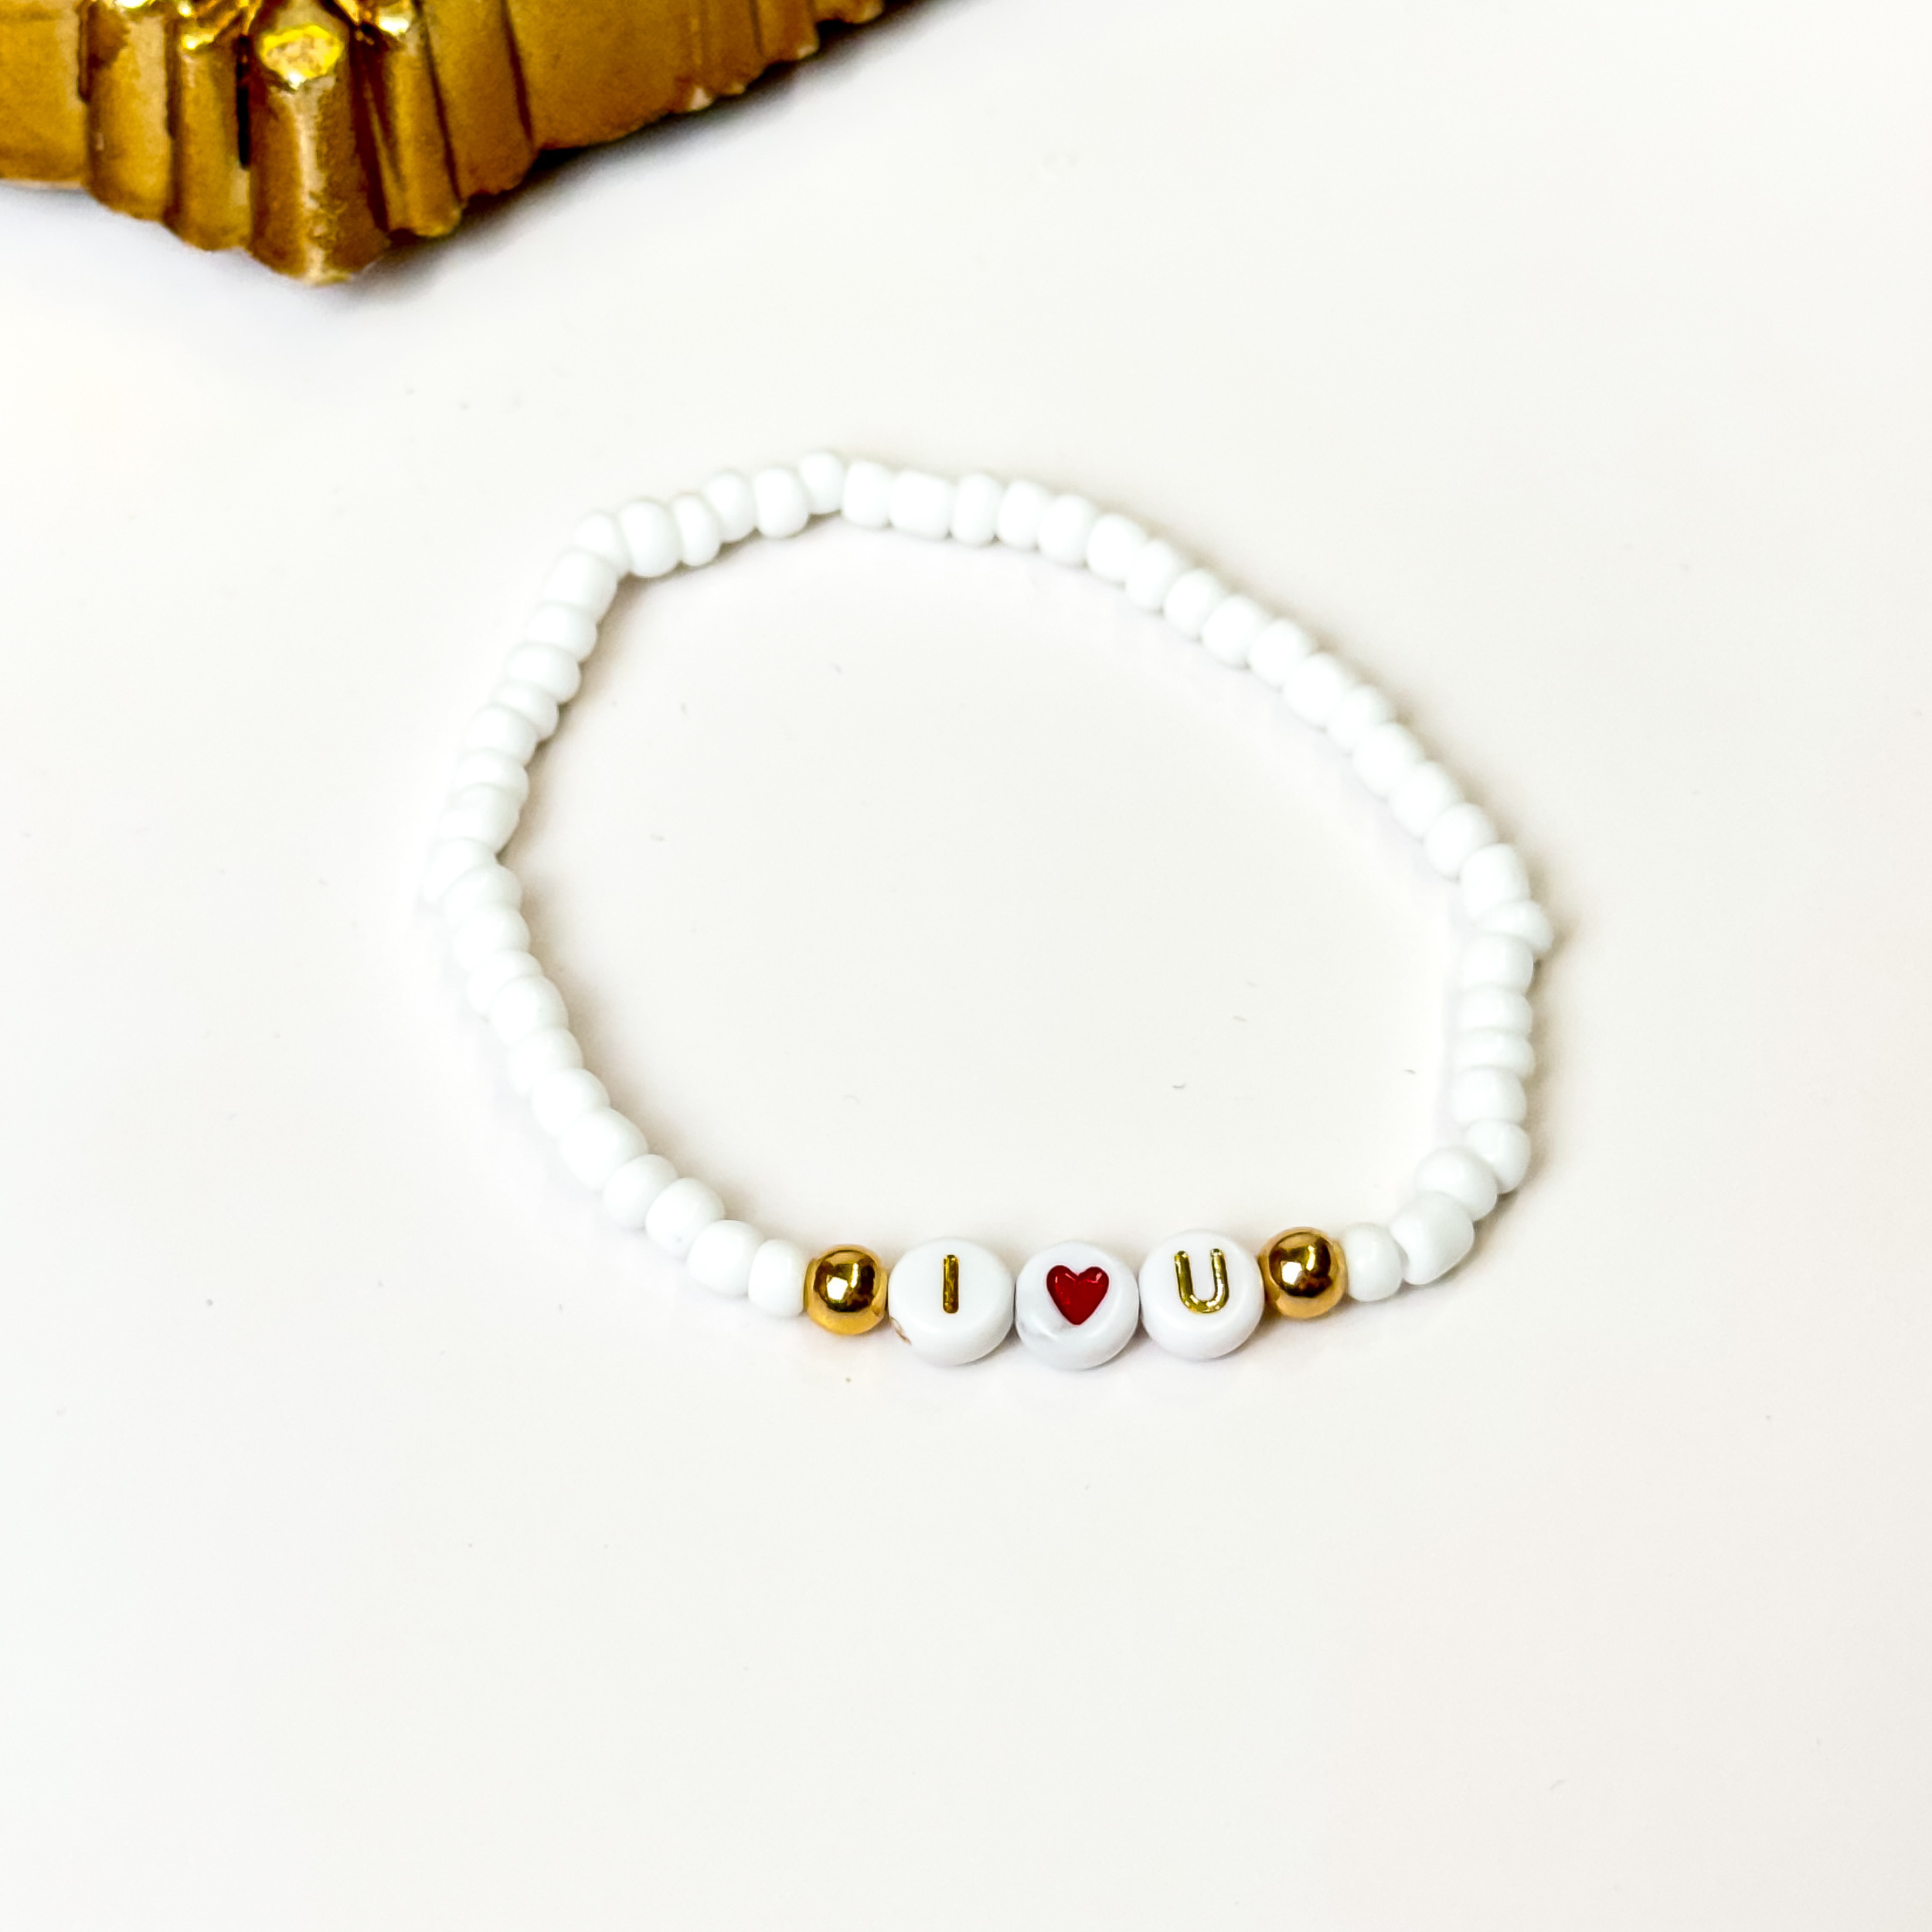 Buy 3 for $10 | Valentine's Day Friendship Stretch Bracelets - Giddy Up Glamour Boutique